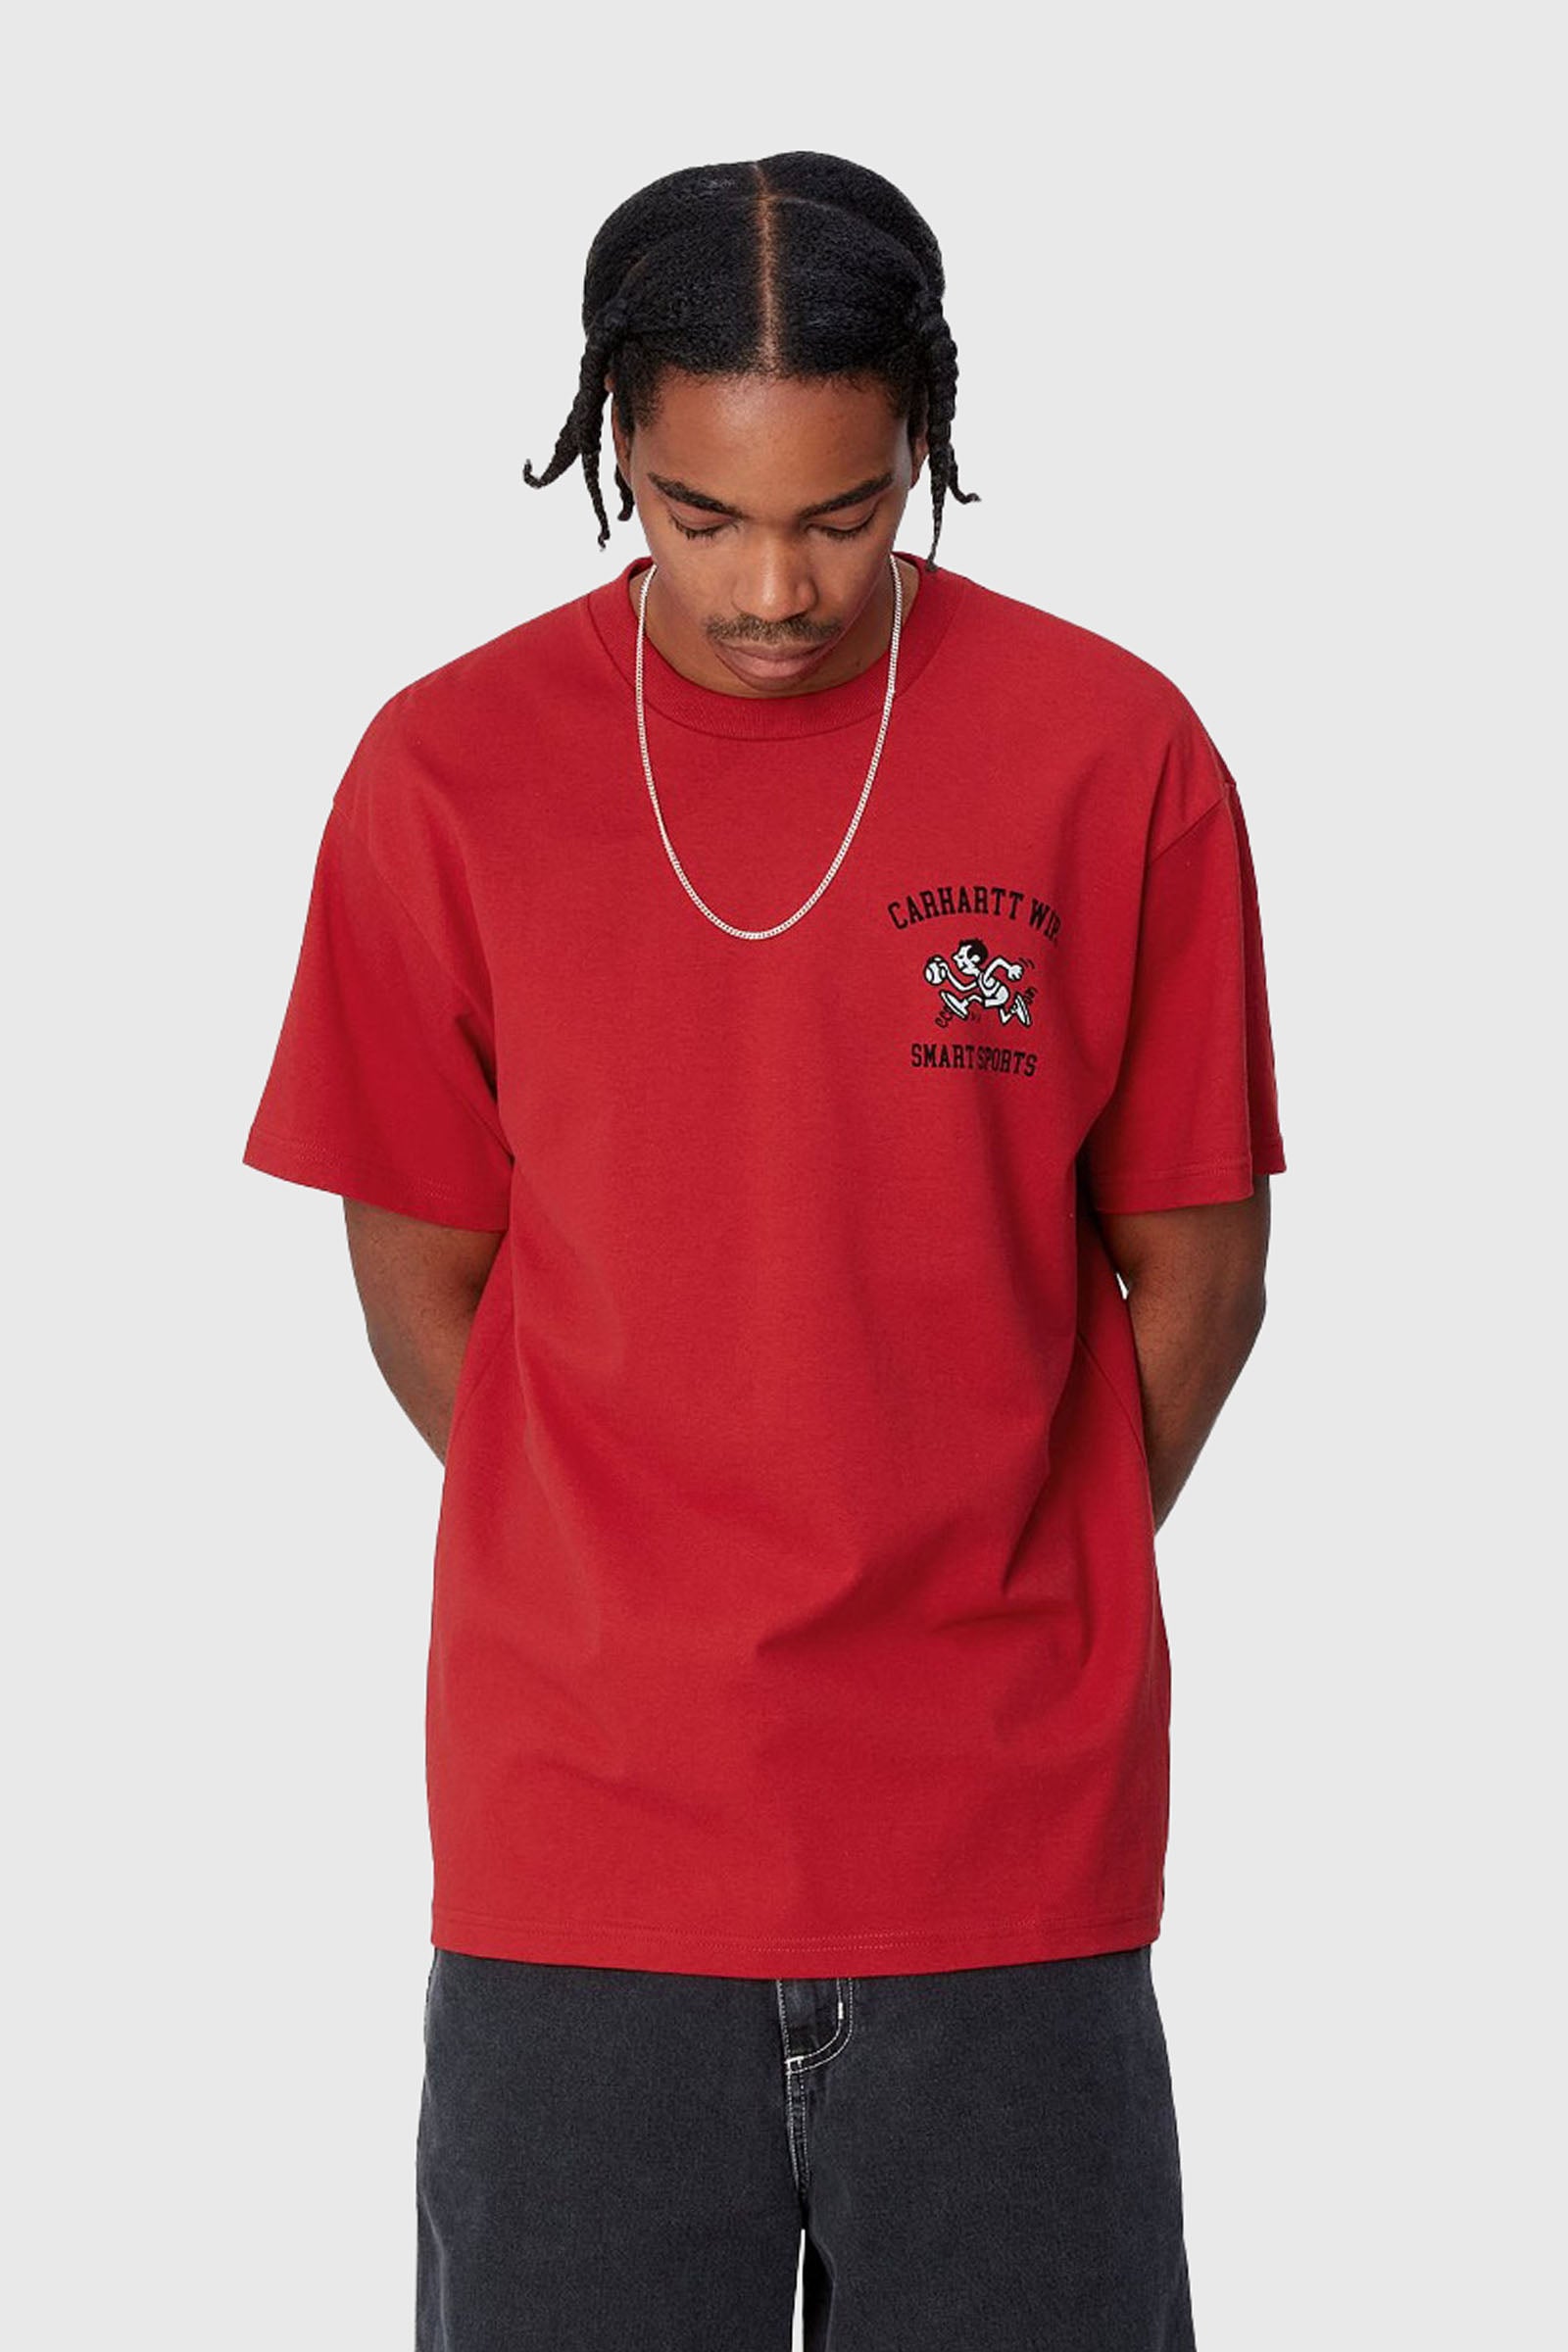 Carhartt WIP T-Shirt S/S Smart Sports Cotton Red - 1